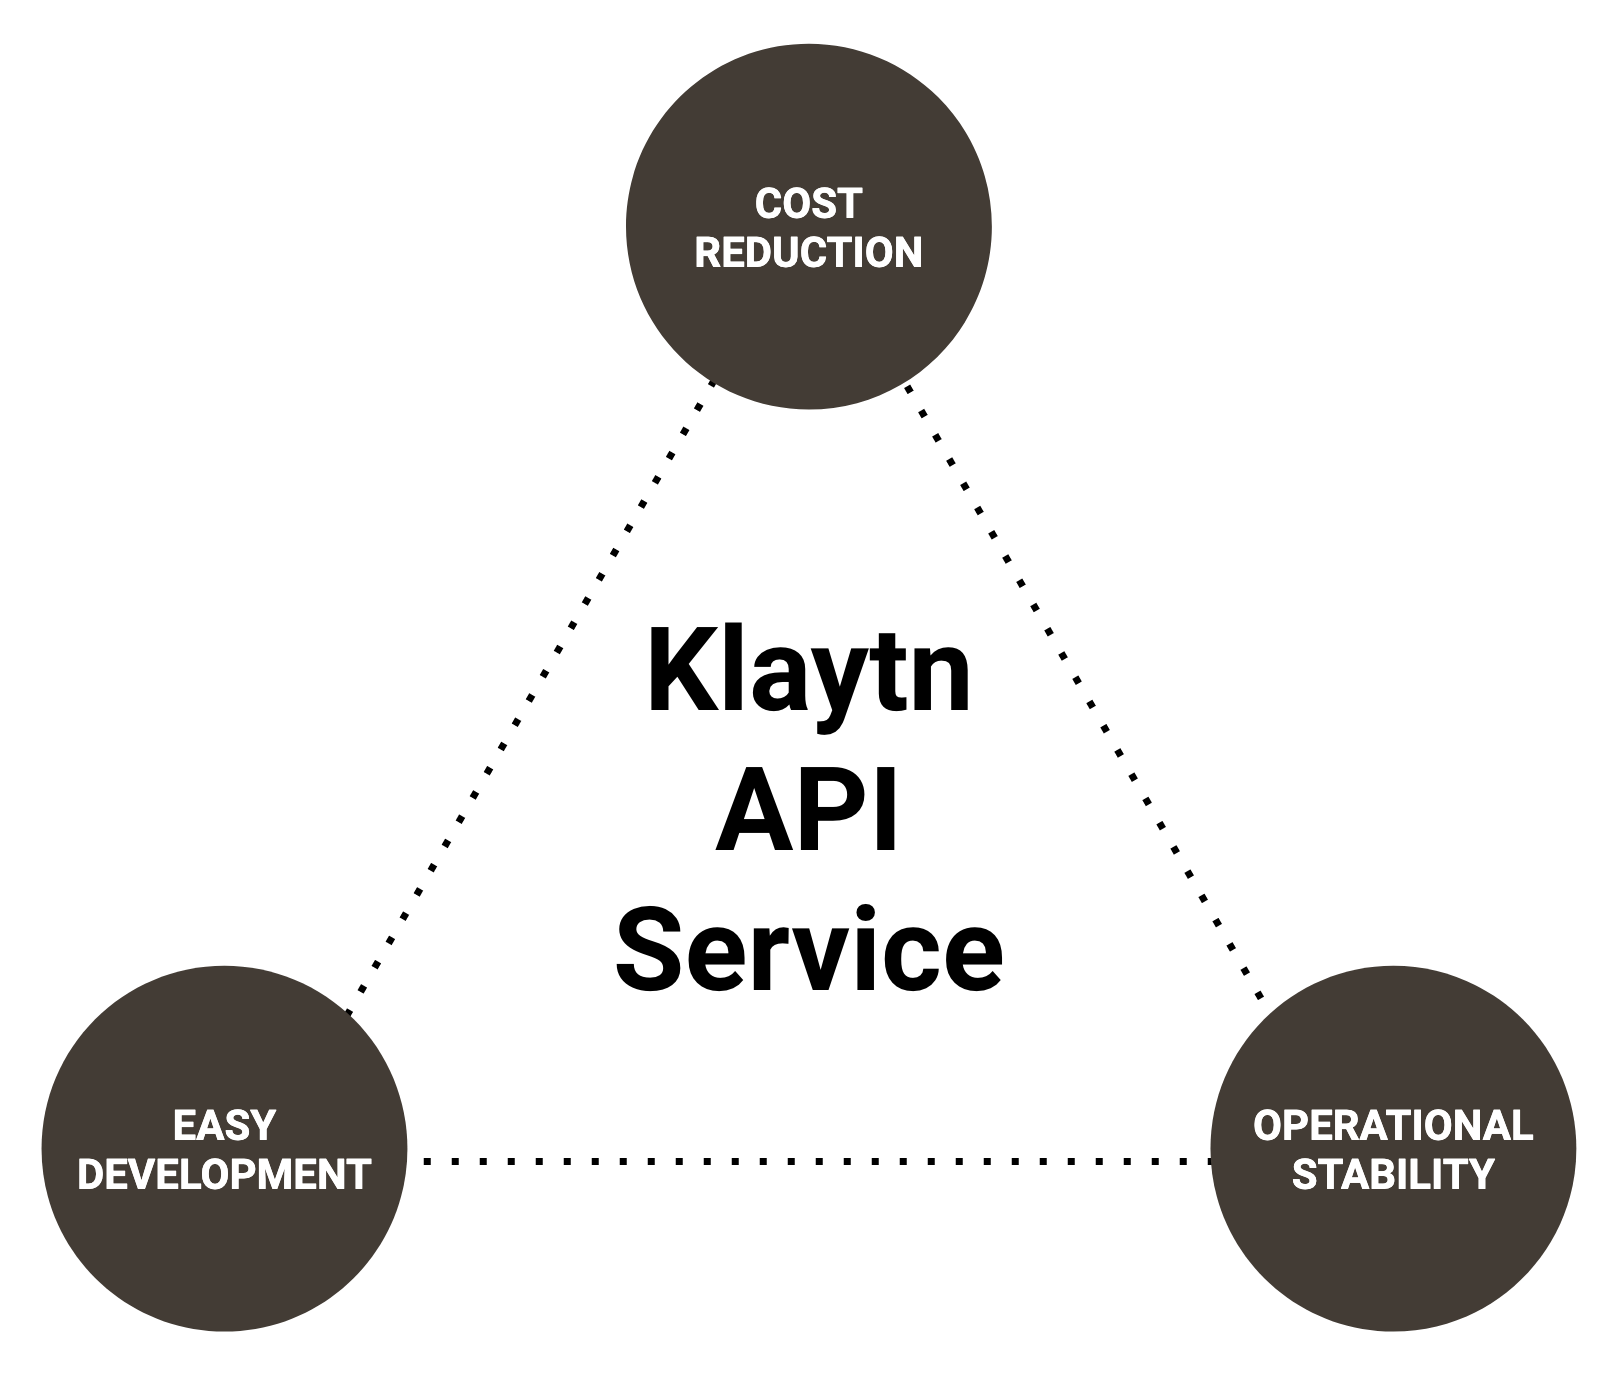 Benefits of Klaytn API Service